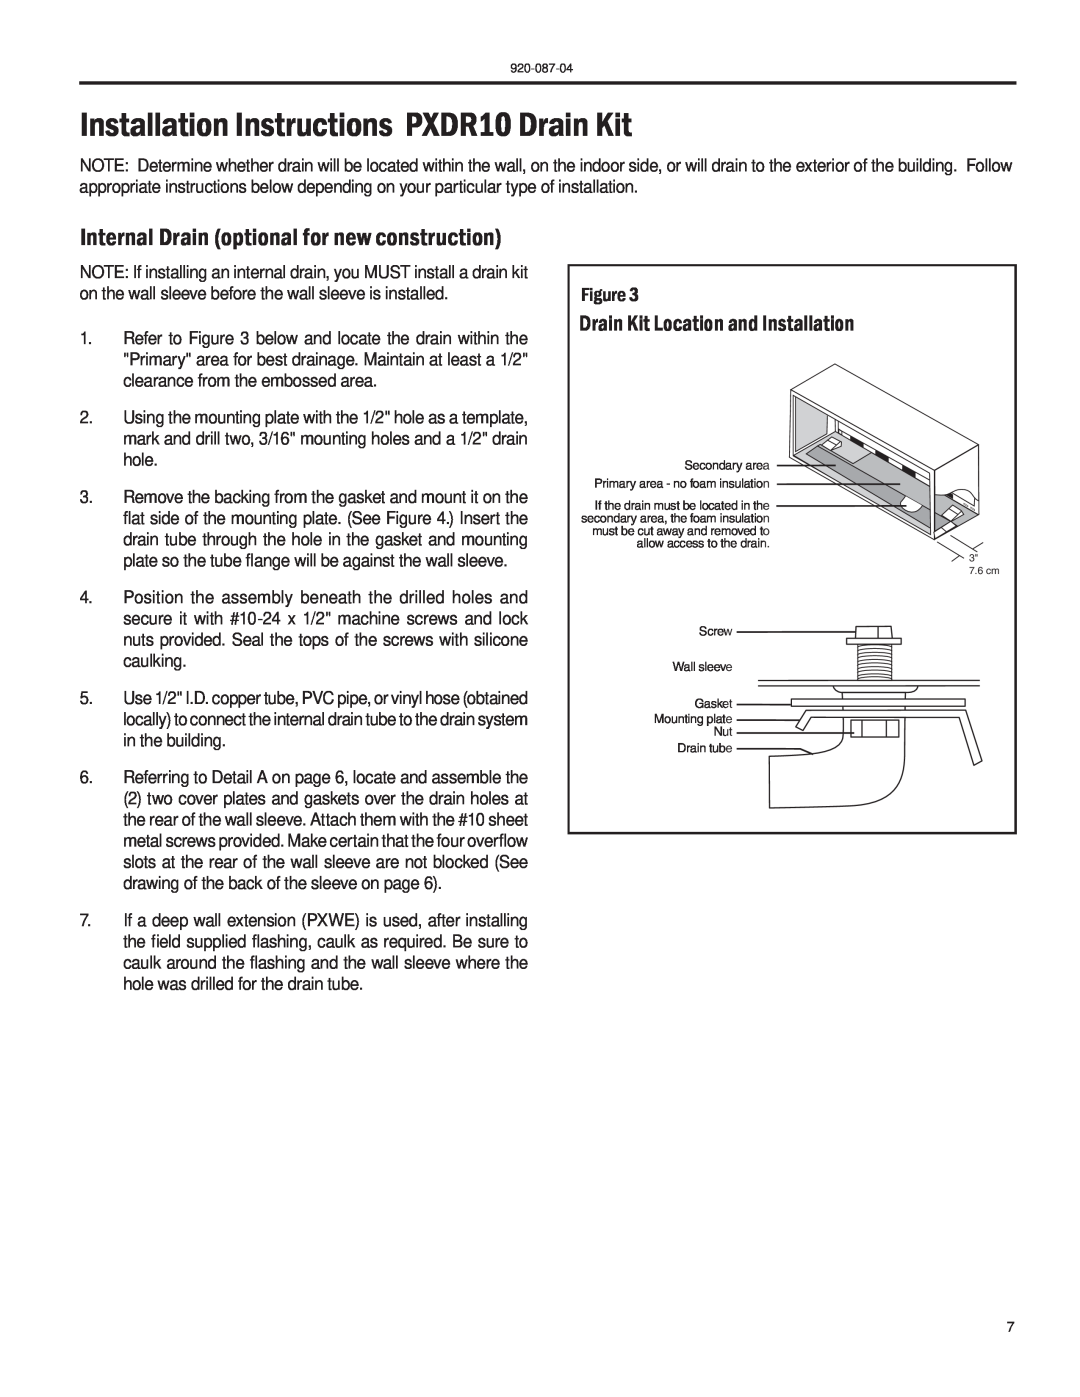 Friedrich HEAT PUMPS manual Installation Instructions PXDR10 Drain Kit, Internal Drain optional for new construction 